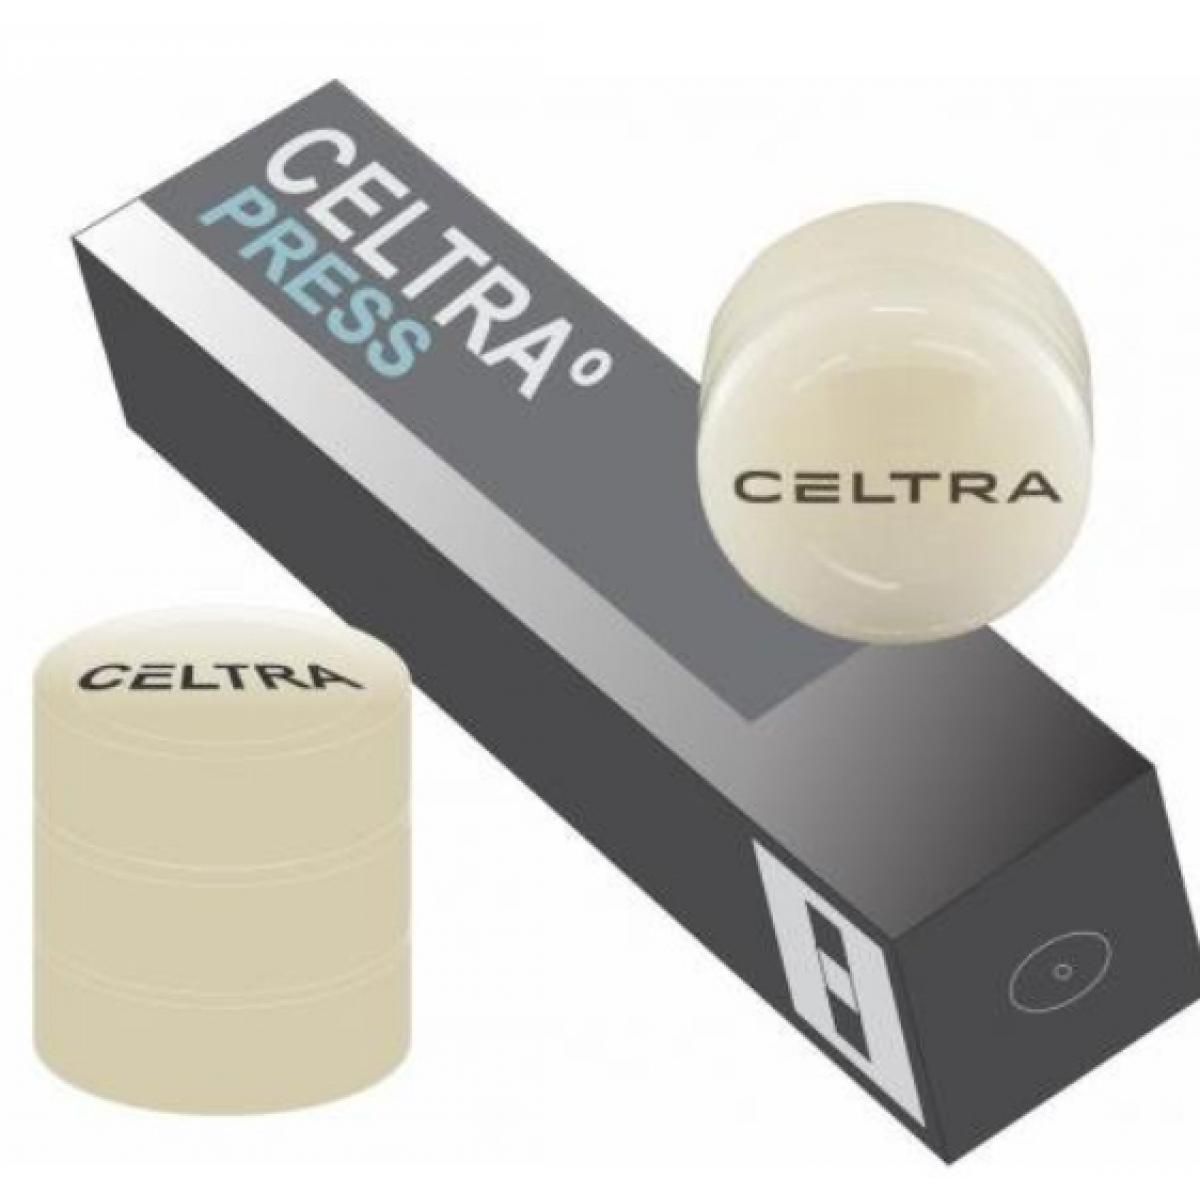 CELTRA PRESS HT I1 5 X 3 GR DENTSPLY -